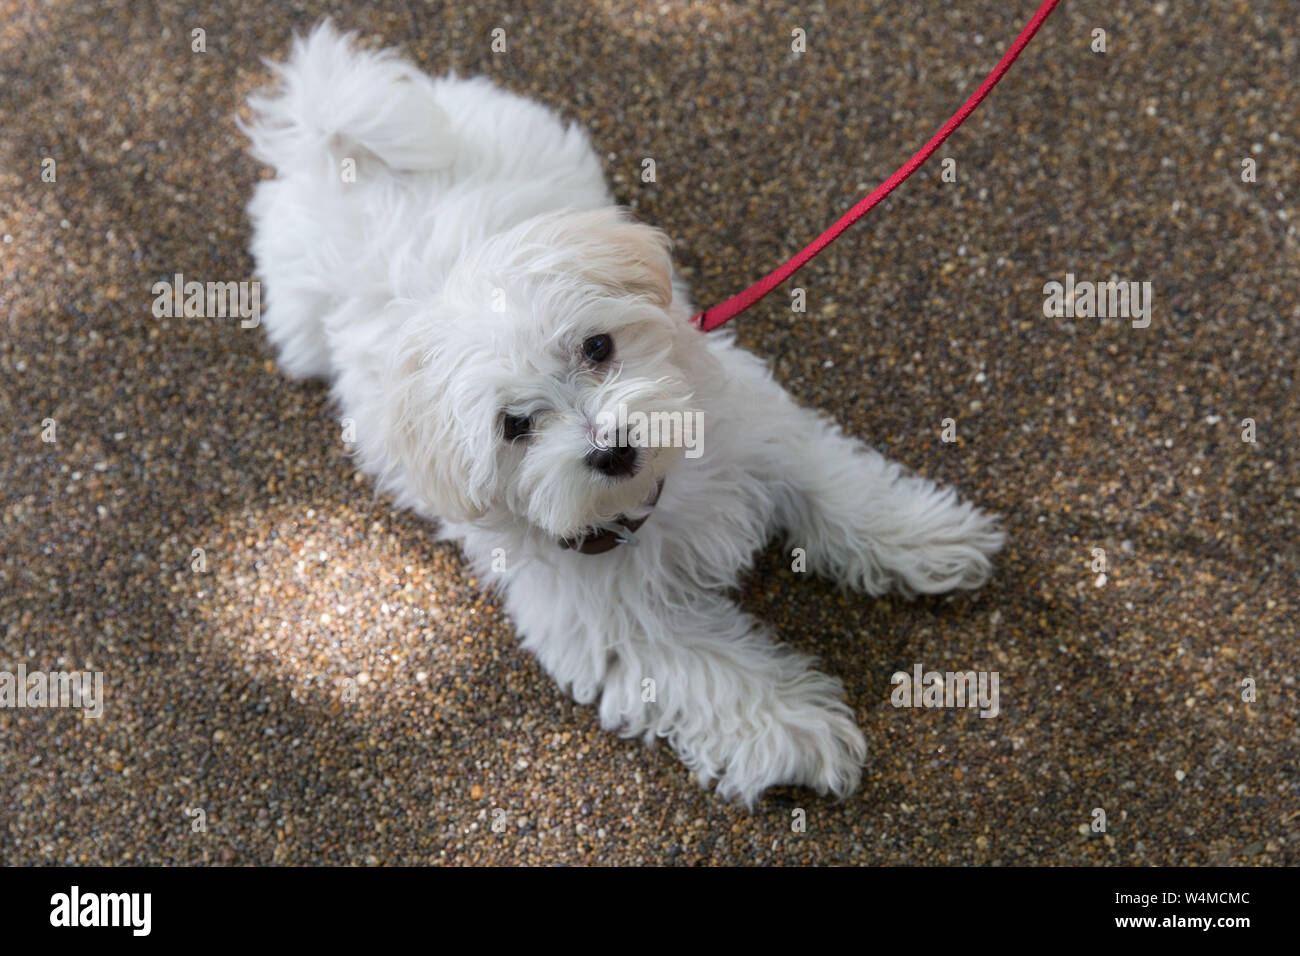 Dog on a leash Stock Photo